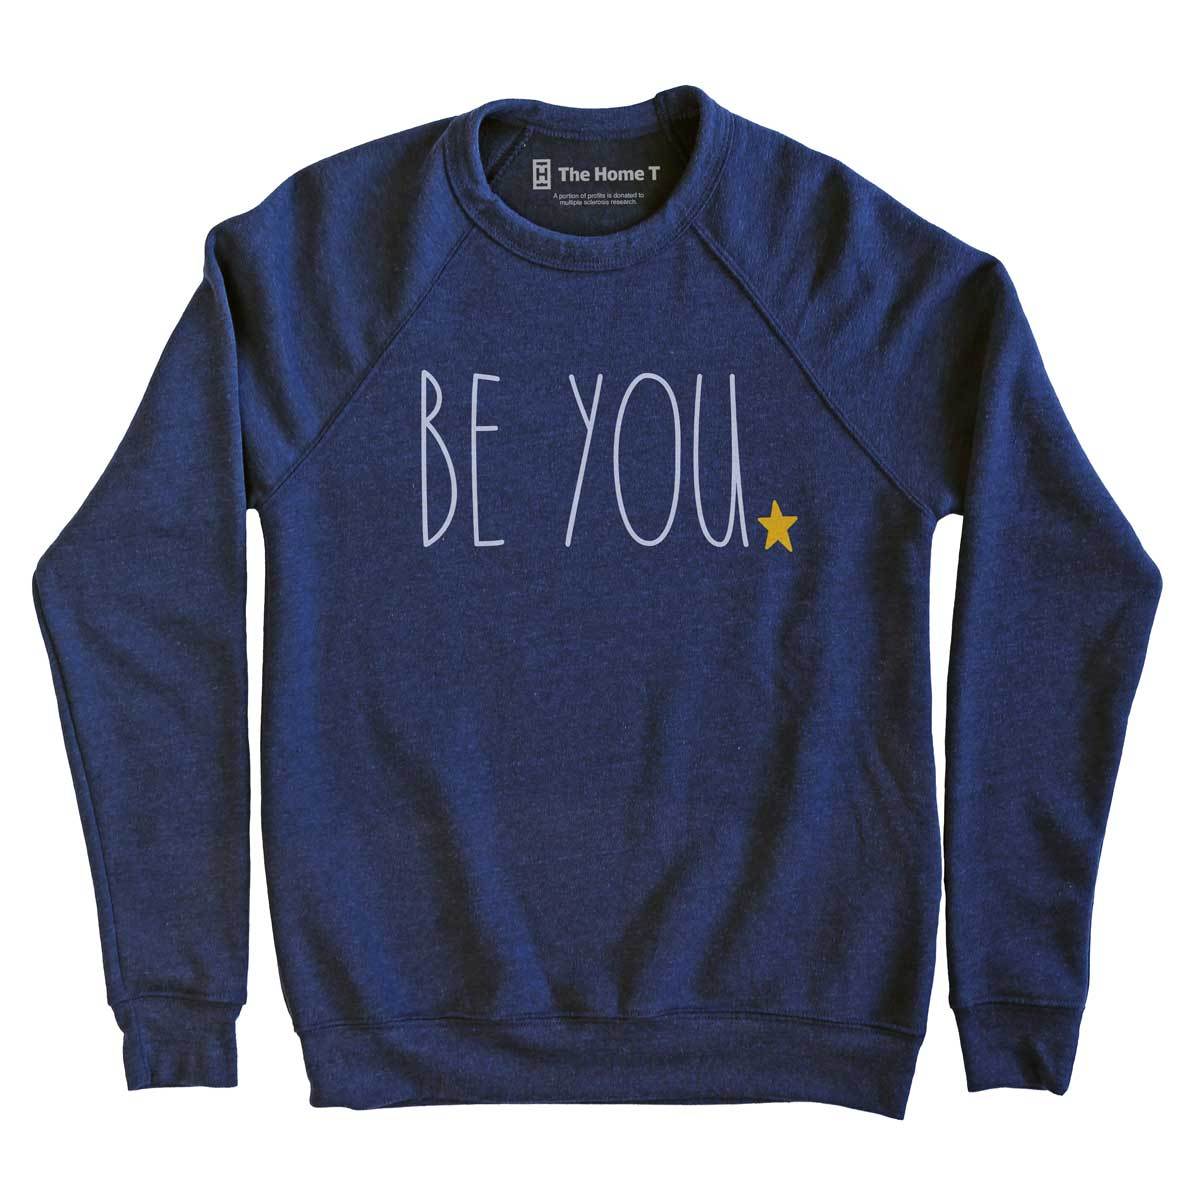 Be You Crew neck The Home T XS Navy Sweatshirt